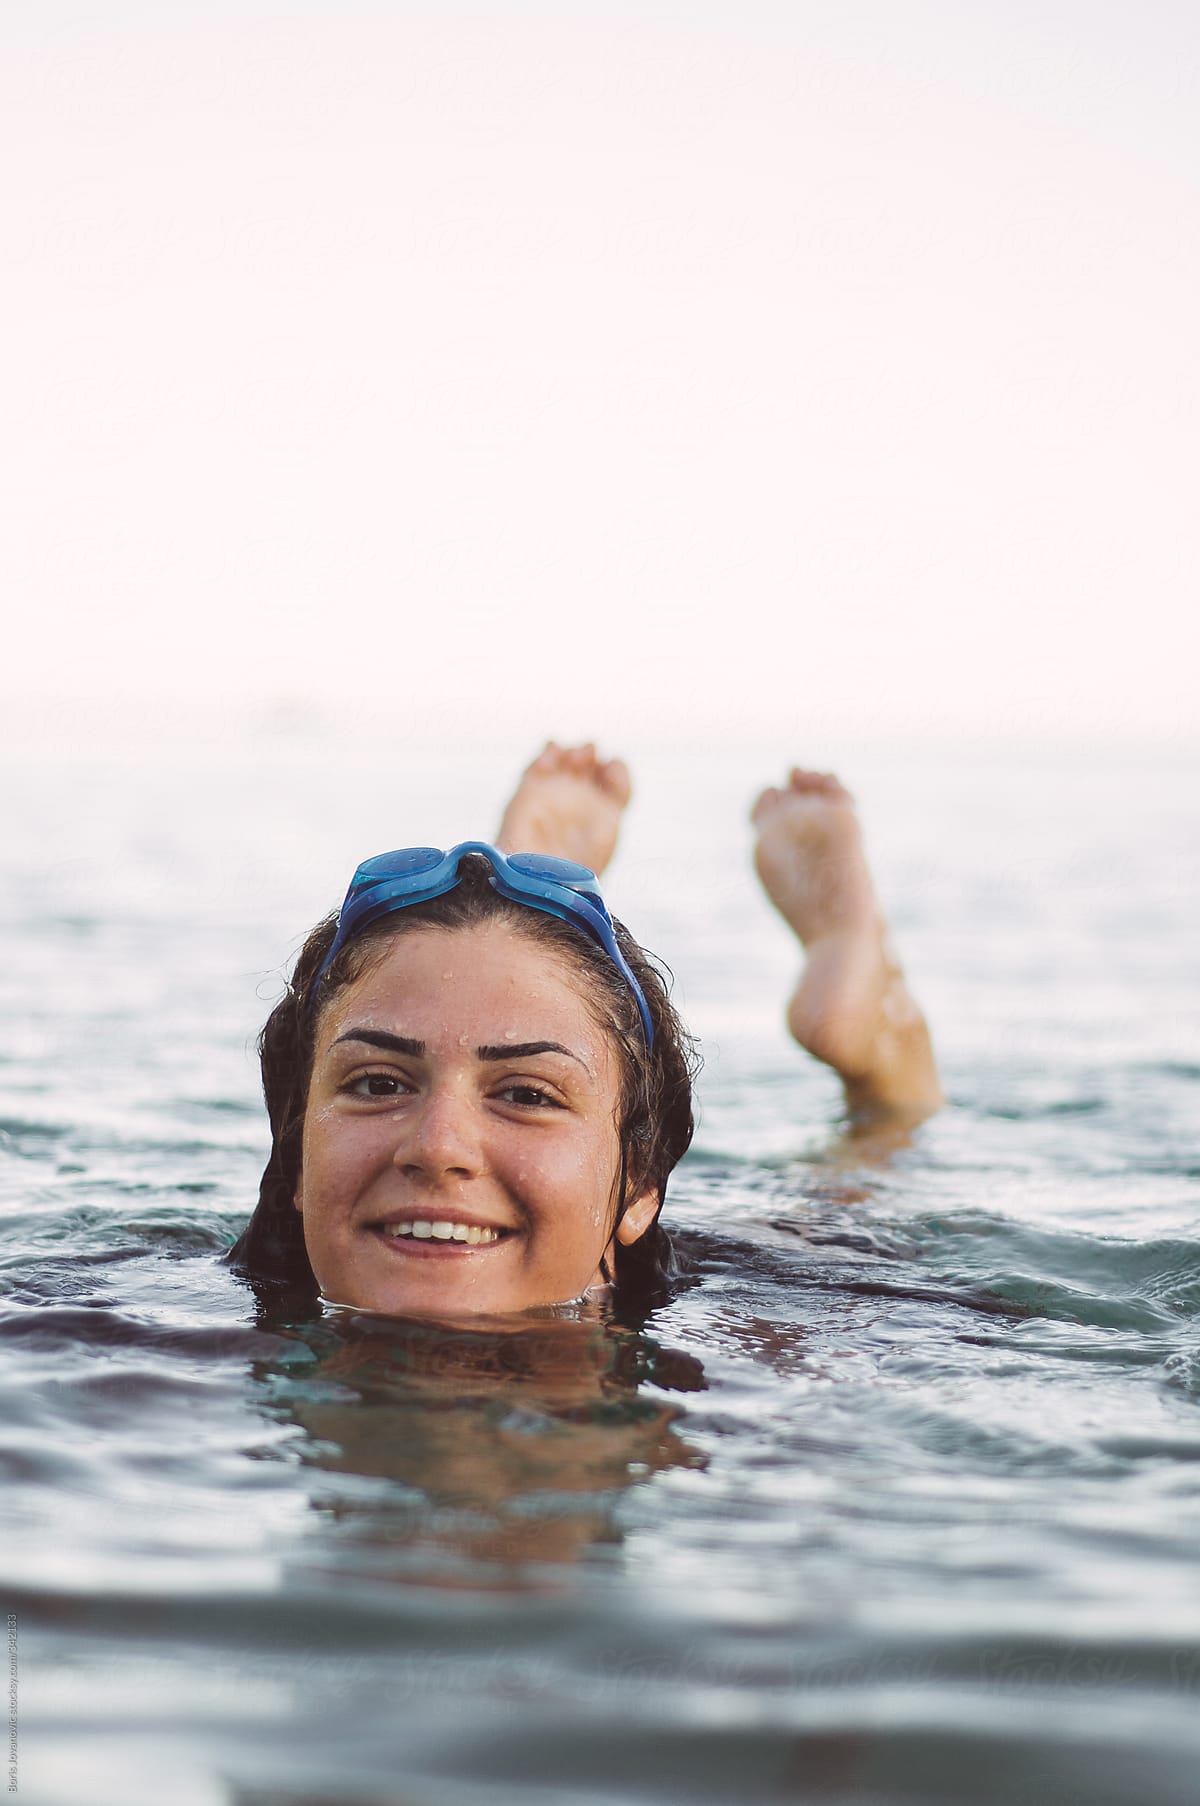 Young Girl Enjoying Dusk In Water By Stocksy Contributor Boris Jovanovic Stocksy